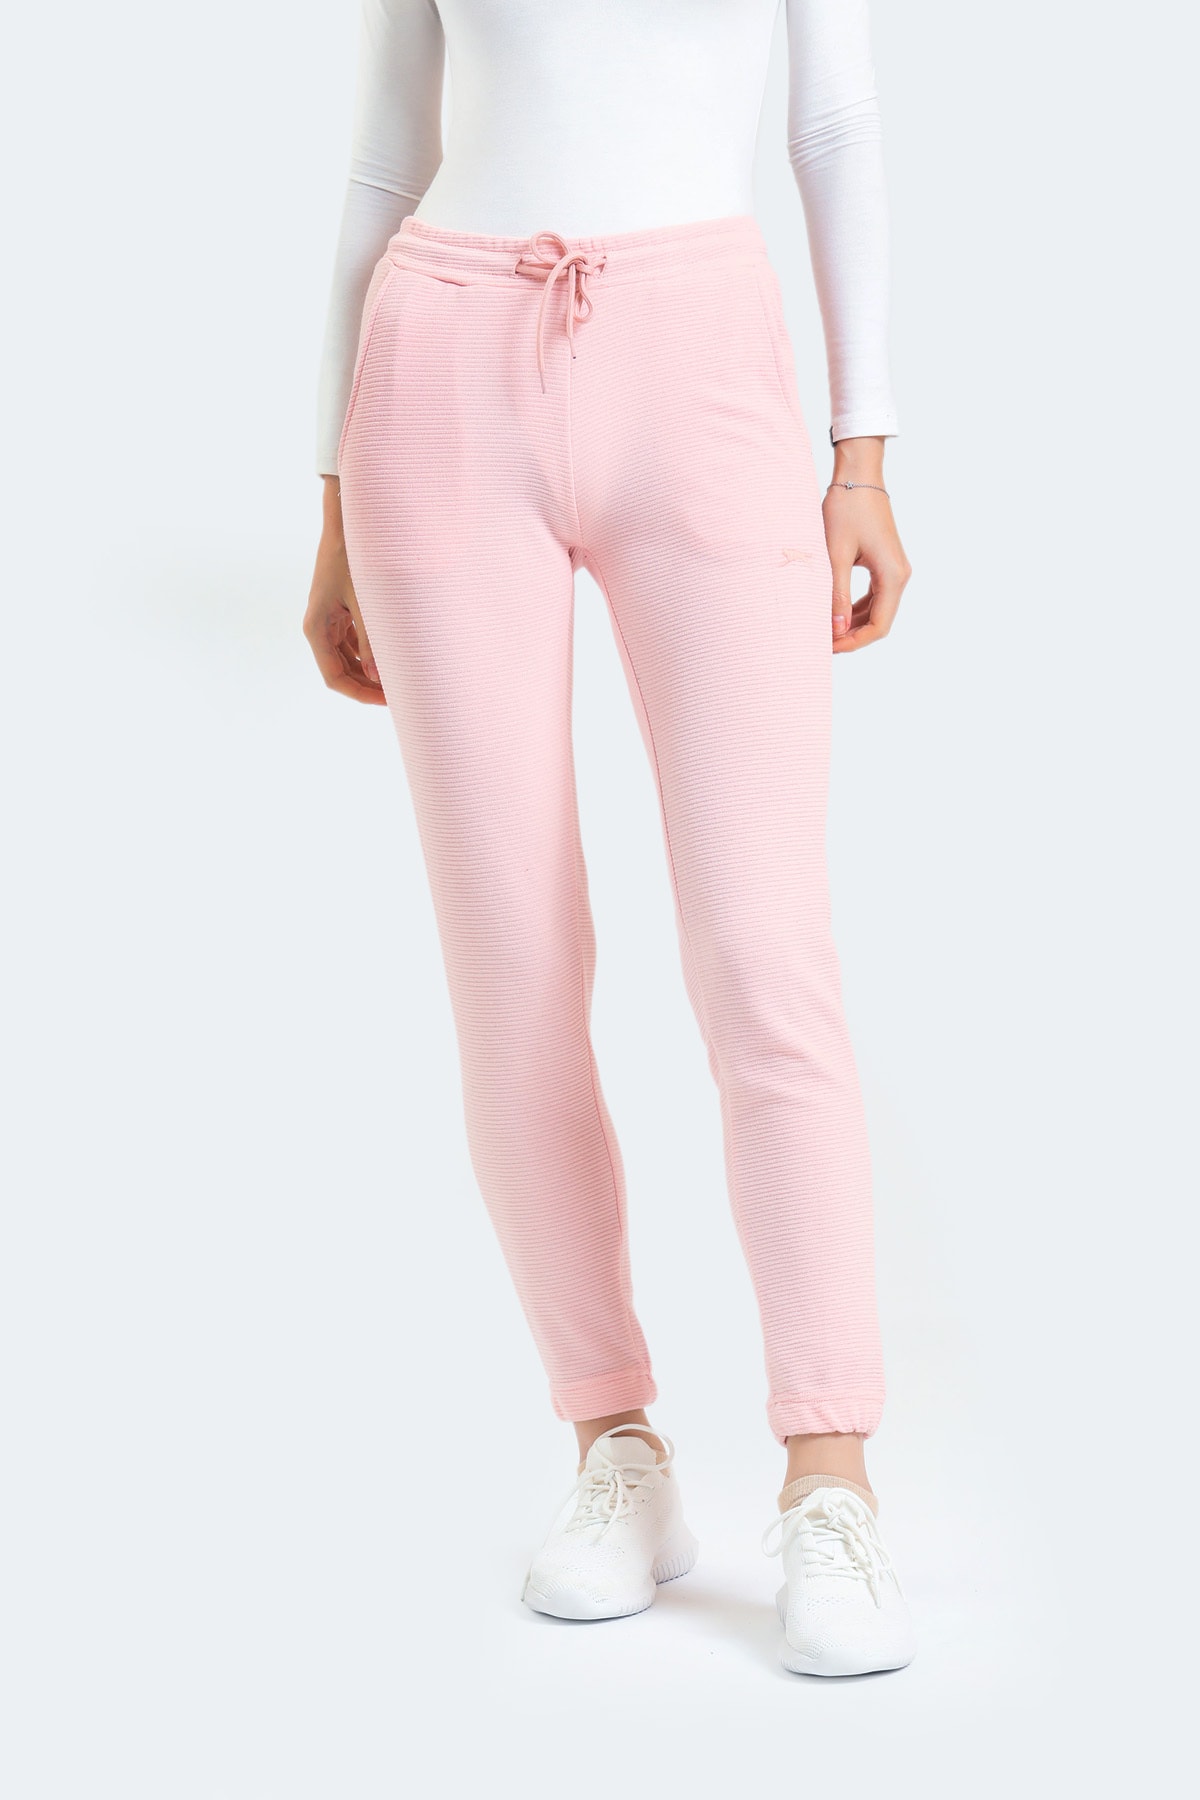 Slazenger Sweatpants - Pink - Joggers